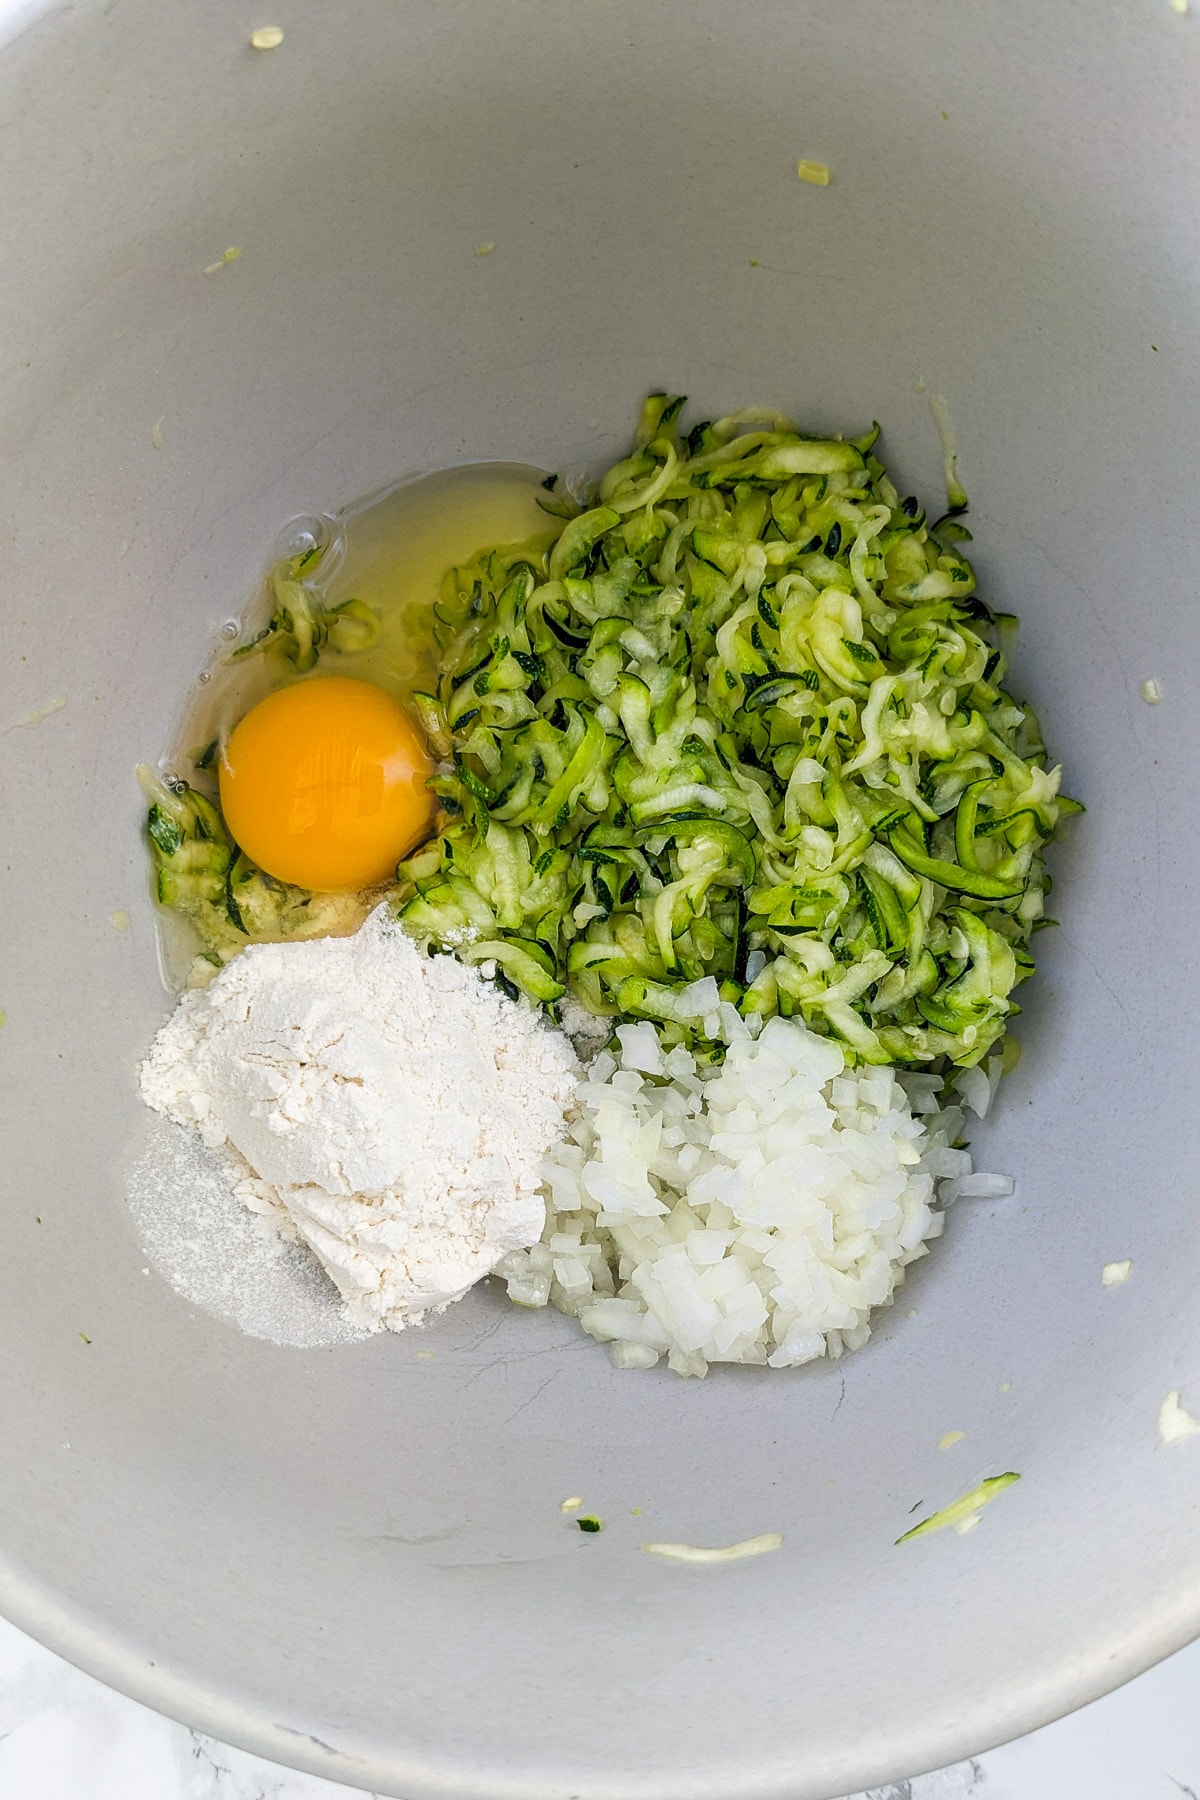 Shredded zuccchini, flour, onions, and an egg in a deep bowl.